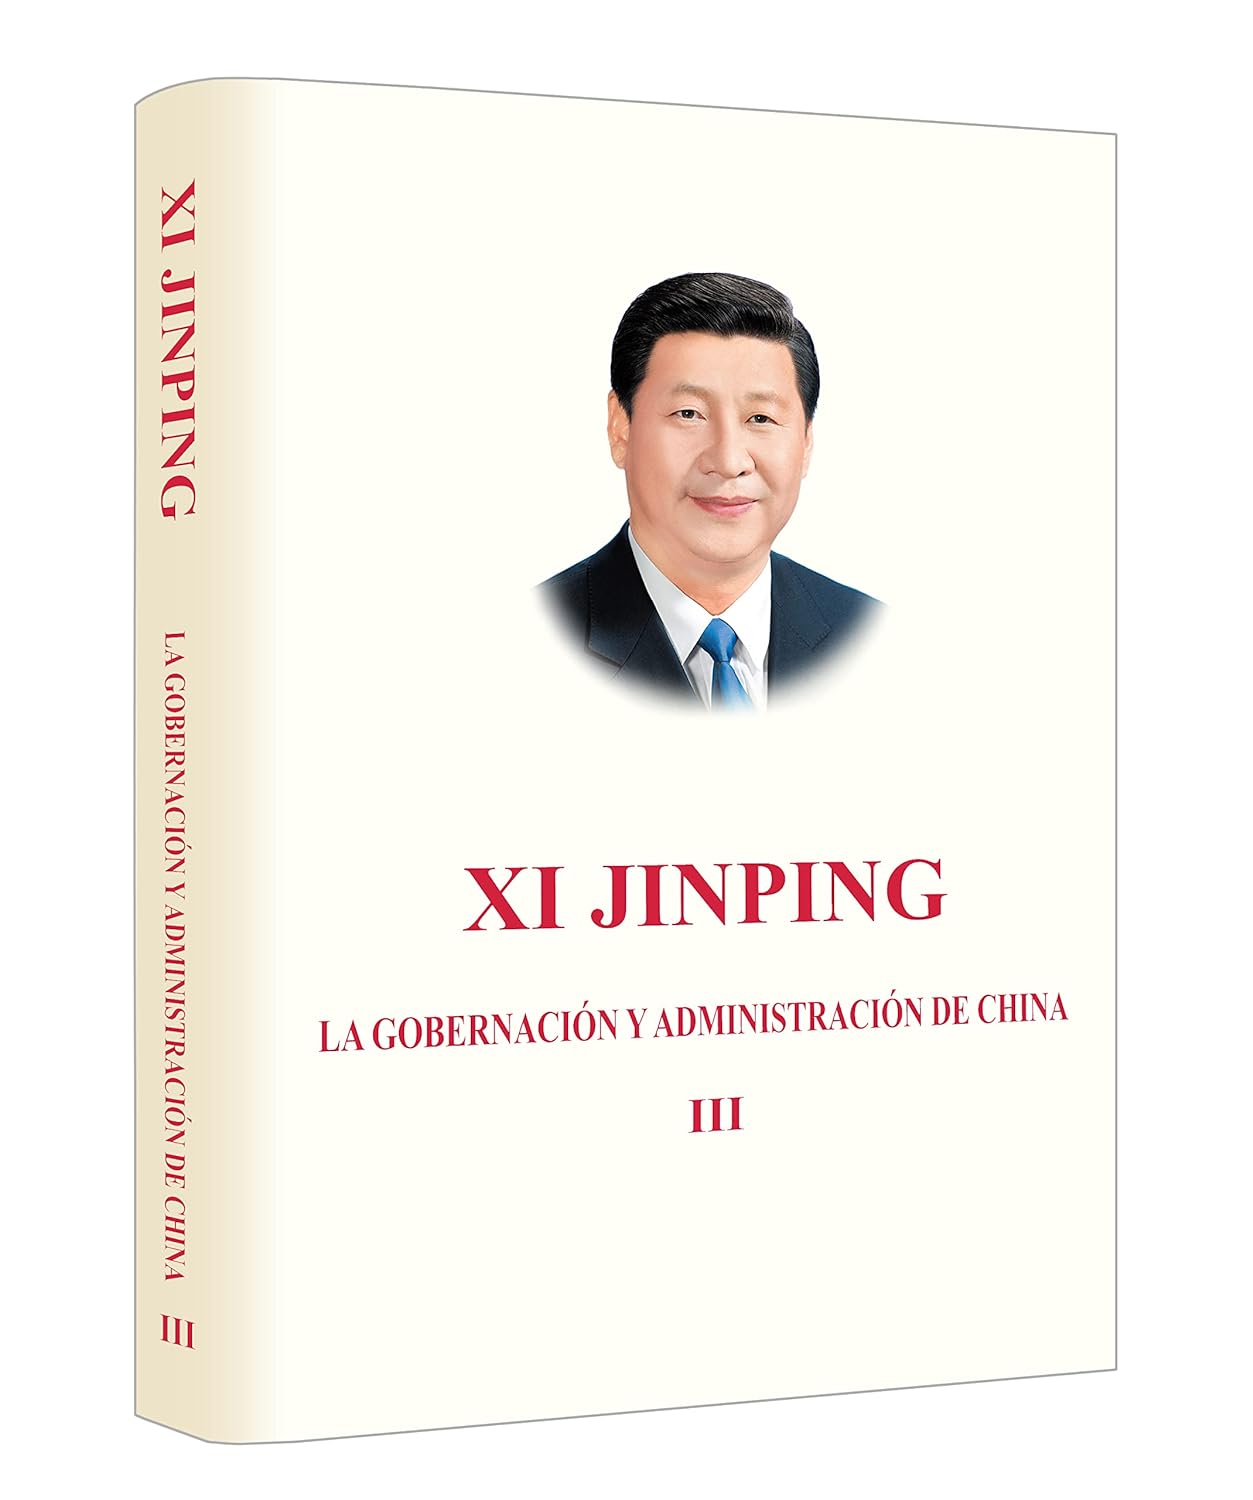 Xi Jinping: The Governance of China Vol. 3 (Spanish) - Paperback